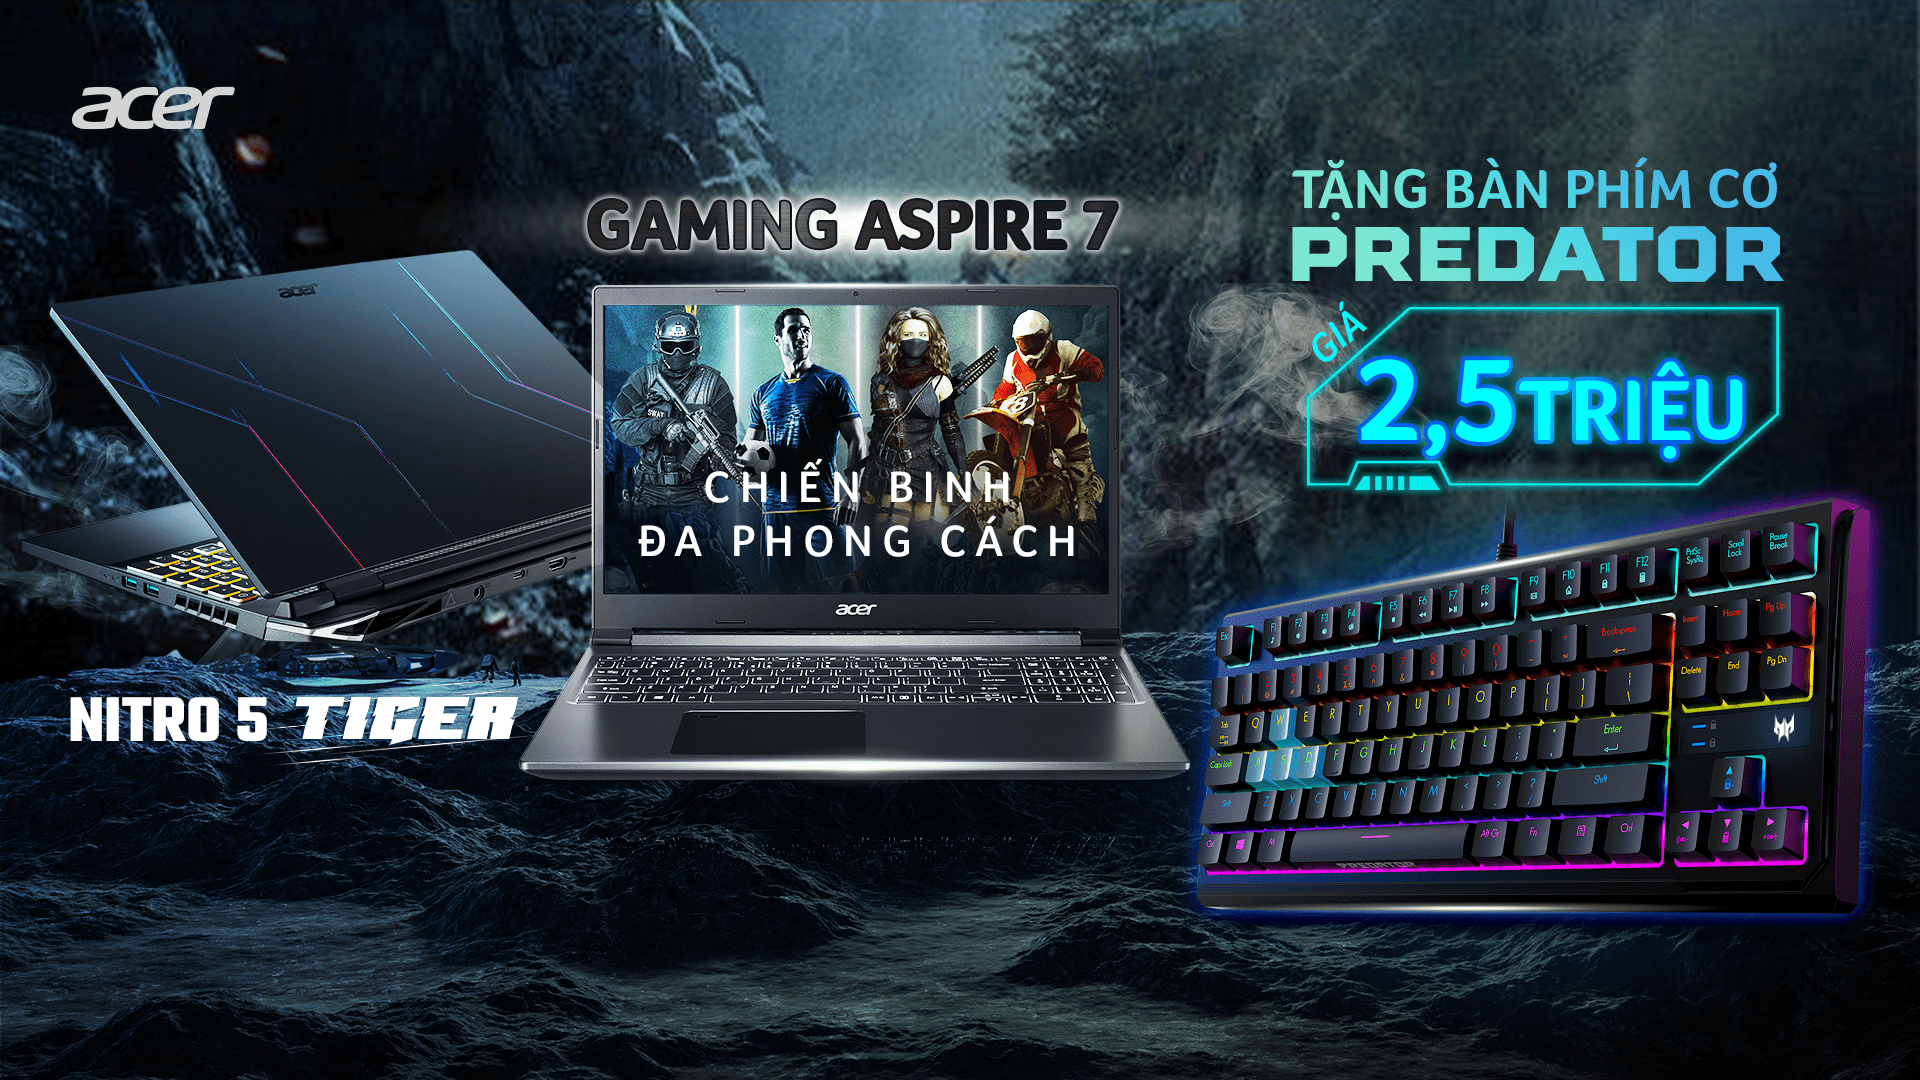 Mua Laptop Gaming Acer Tặng Bàn Phím Cơ Predator - Aspire 7 AMD